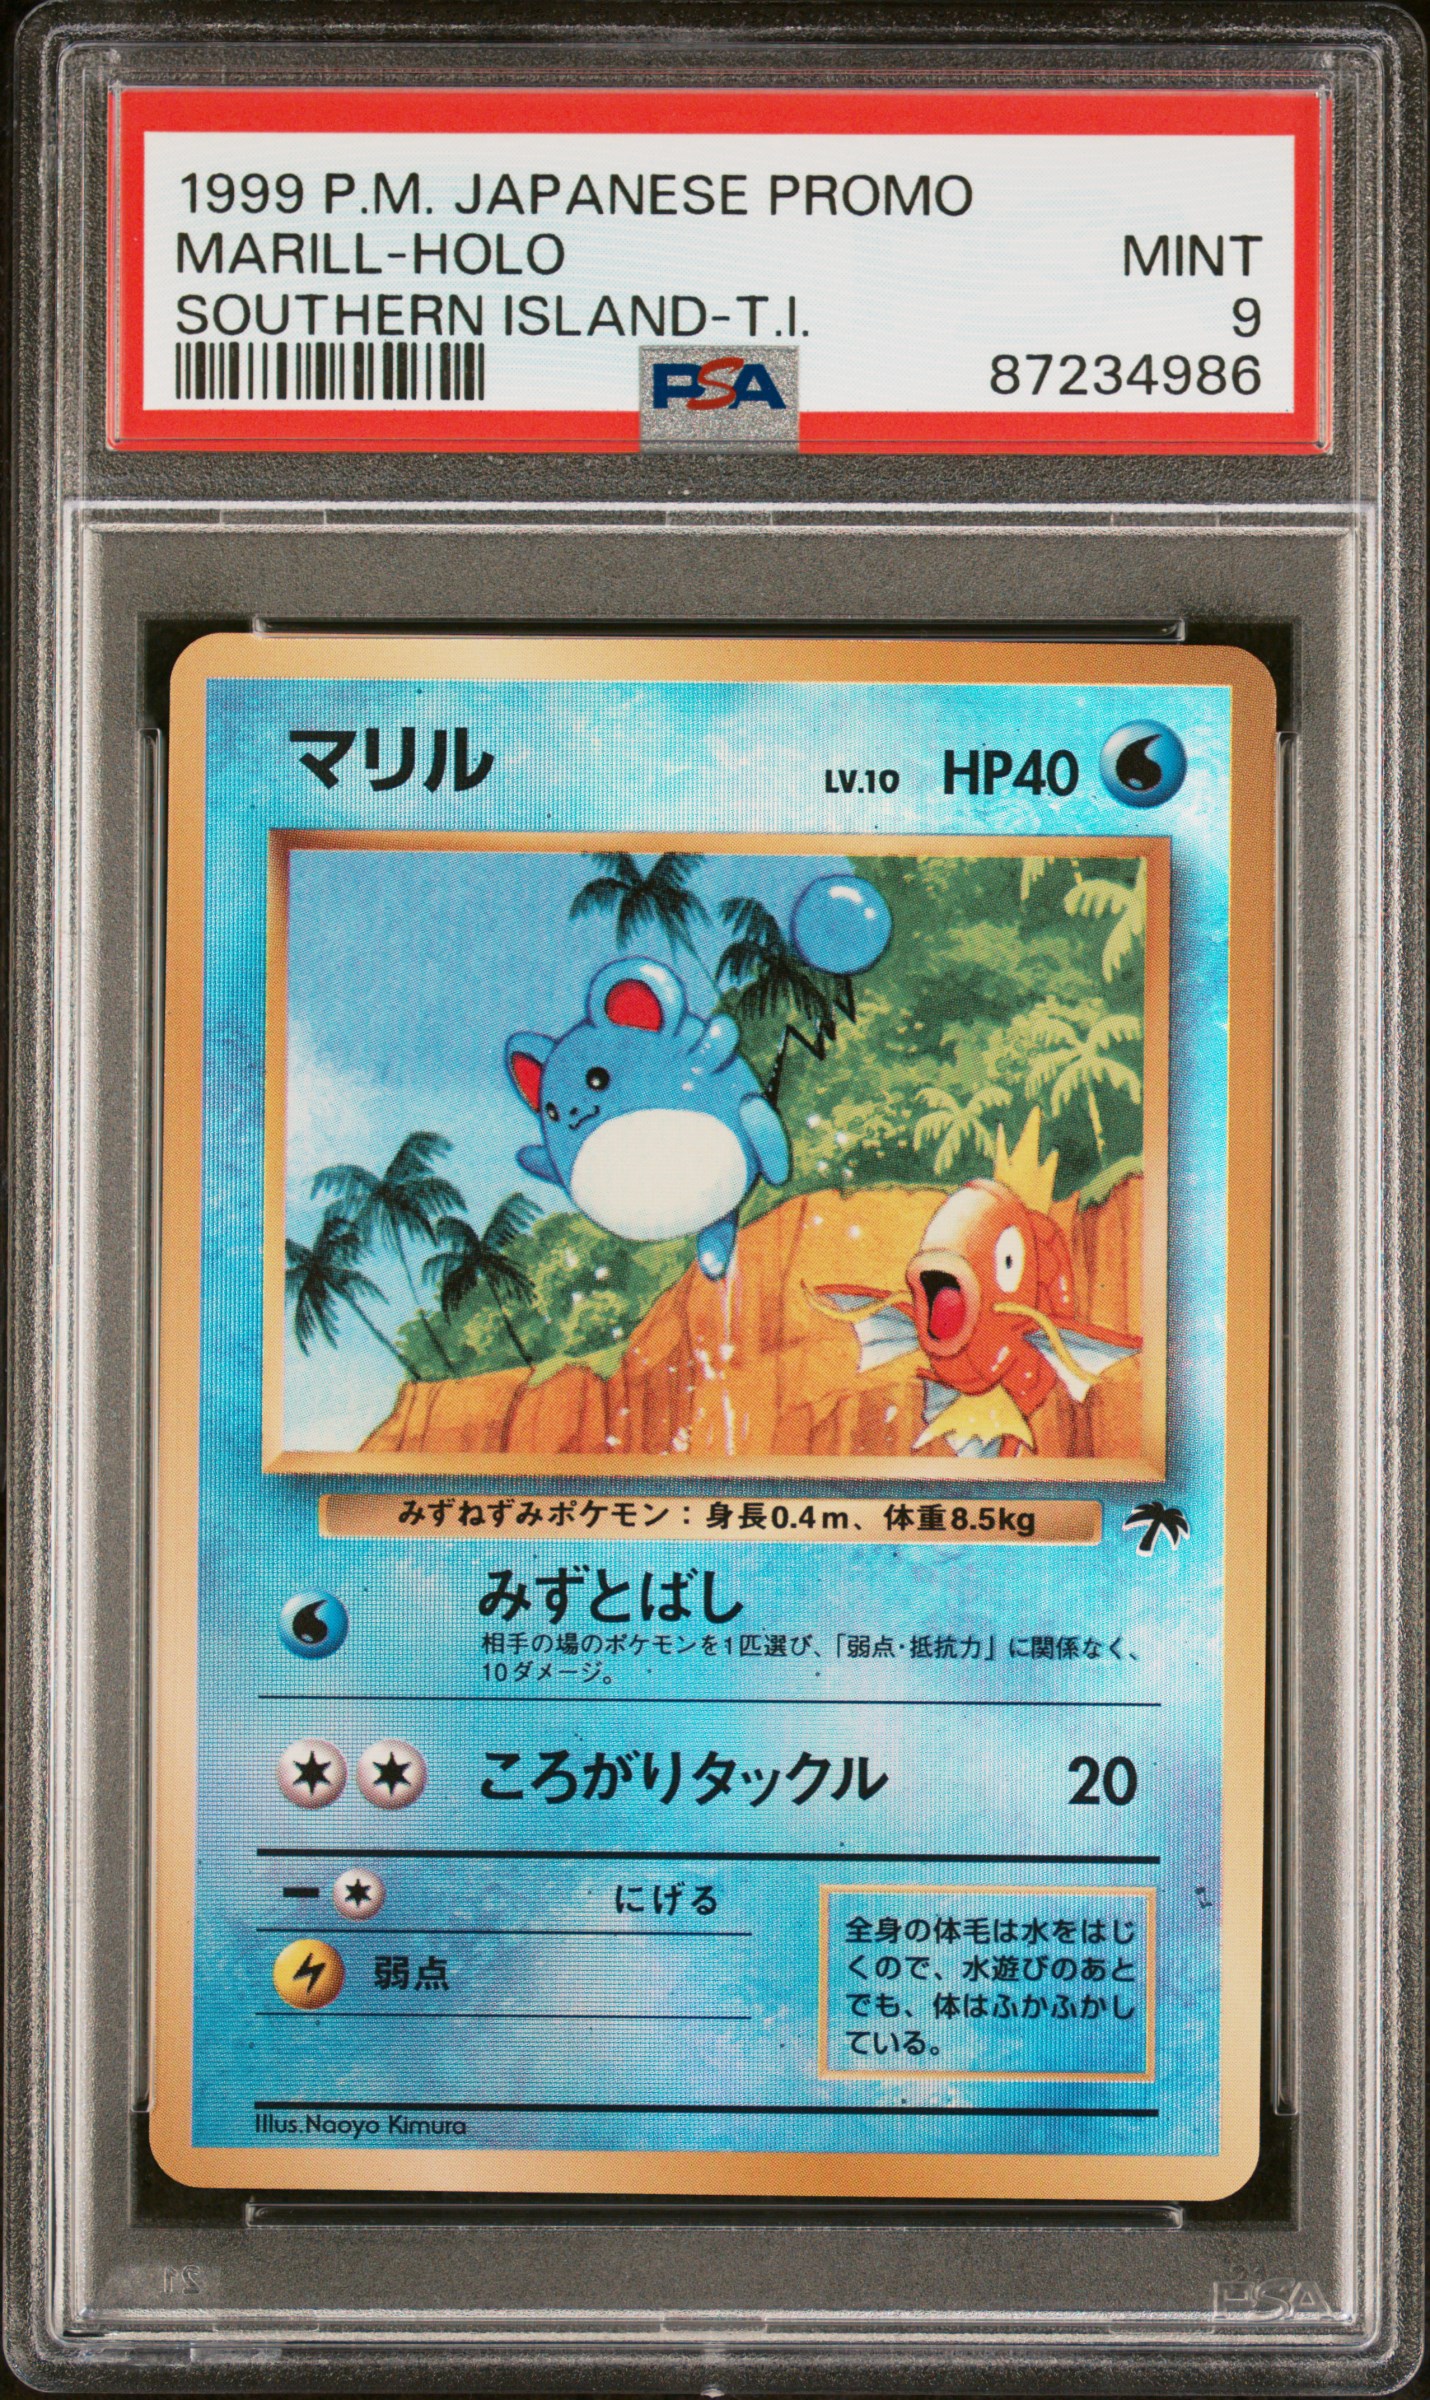 1999 Pokemon Japanese Promo Southern Islands Southern Island-T.I. Marill-Holo – PSA MINT 9